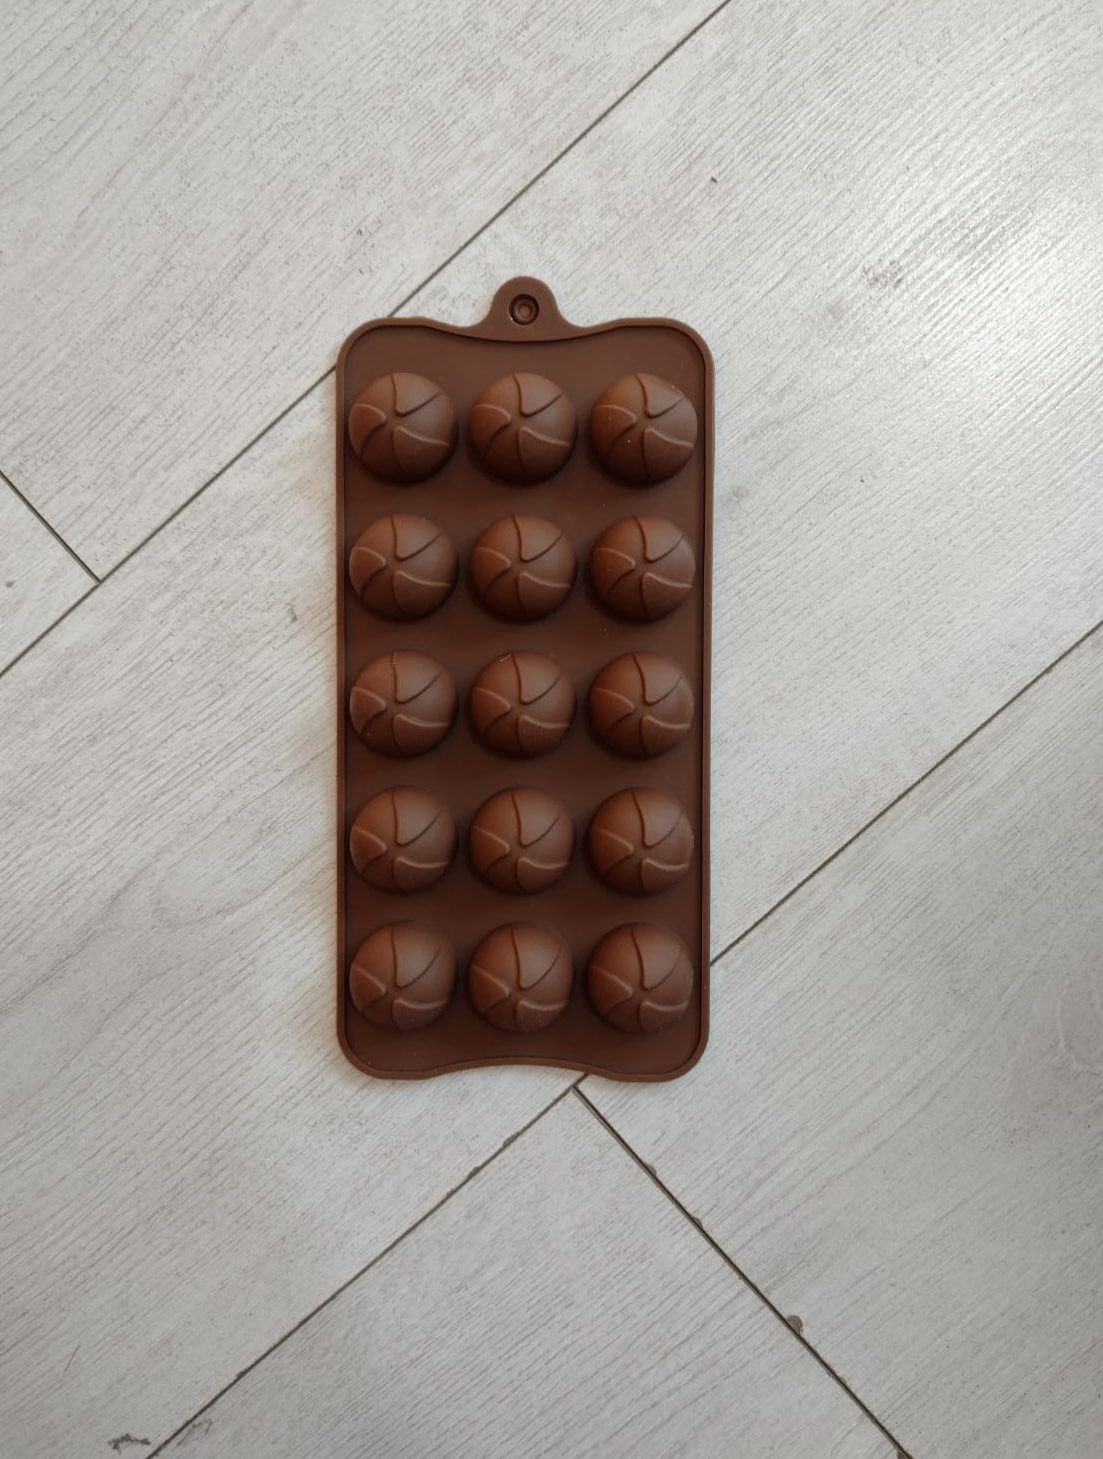 Molde Bombones Chocolate 6 diseños